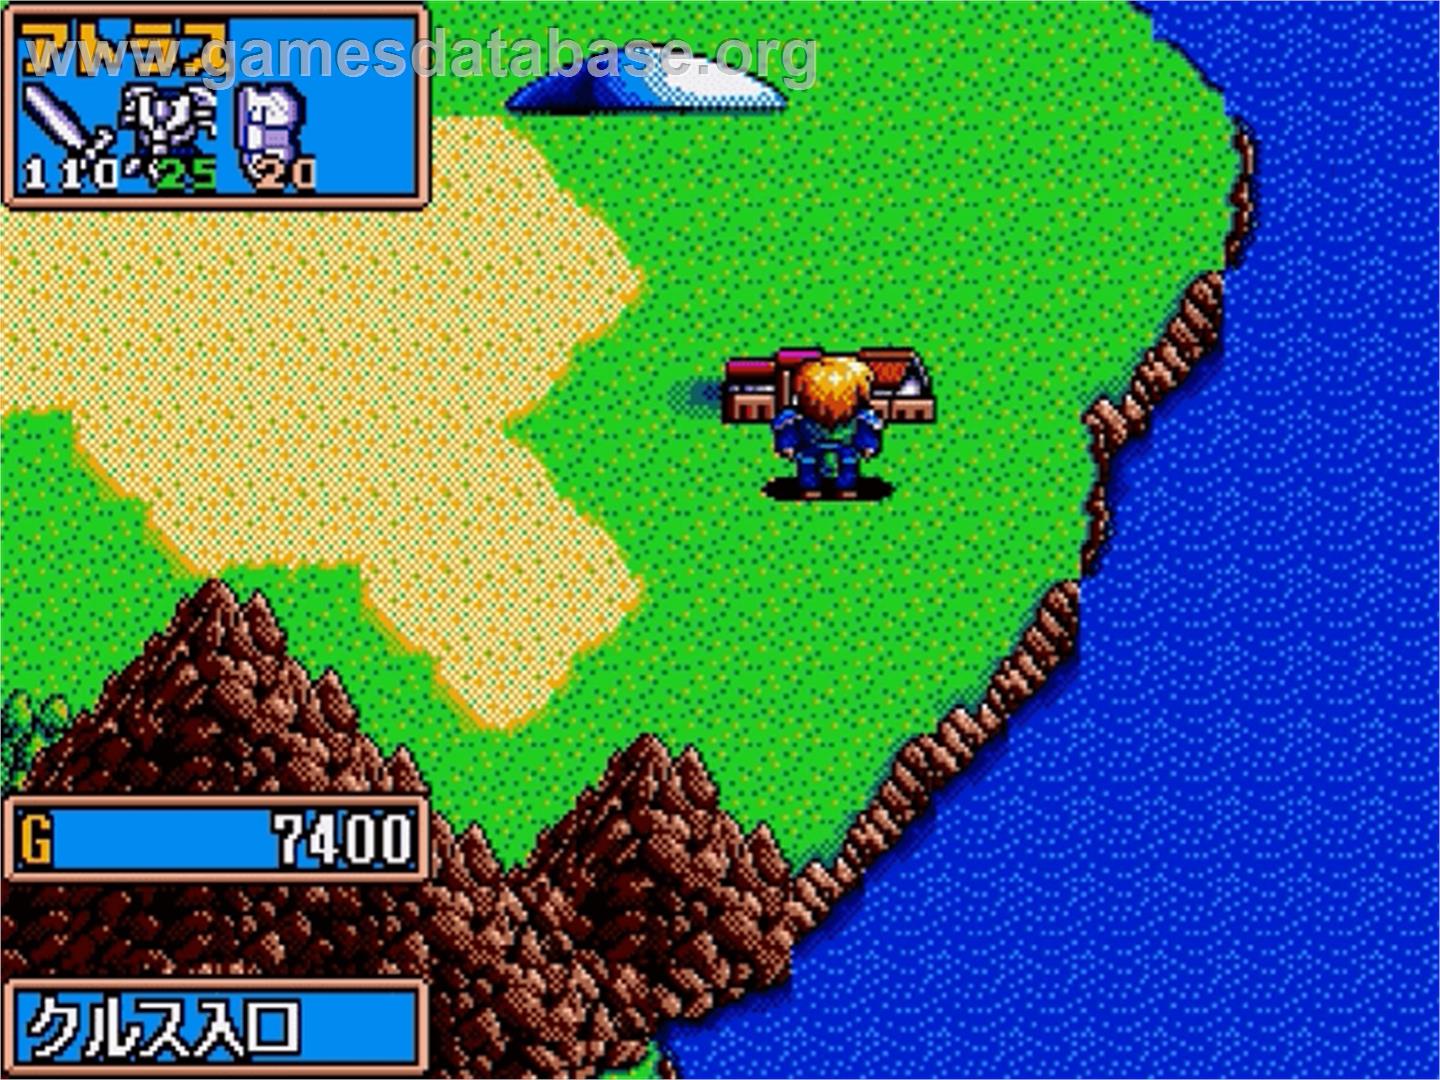 Dragon Slayer: The Legend of Heroes 2 - Sega Genesis - Artwork - In Game